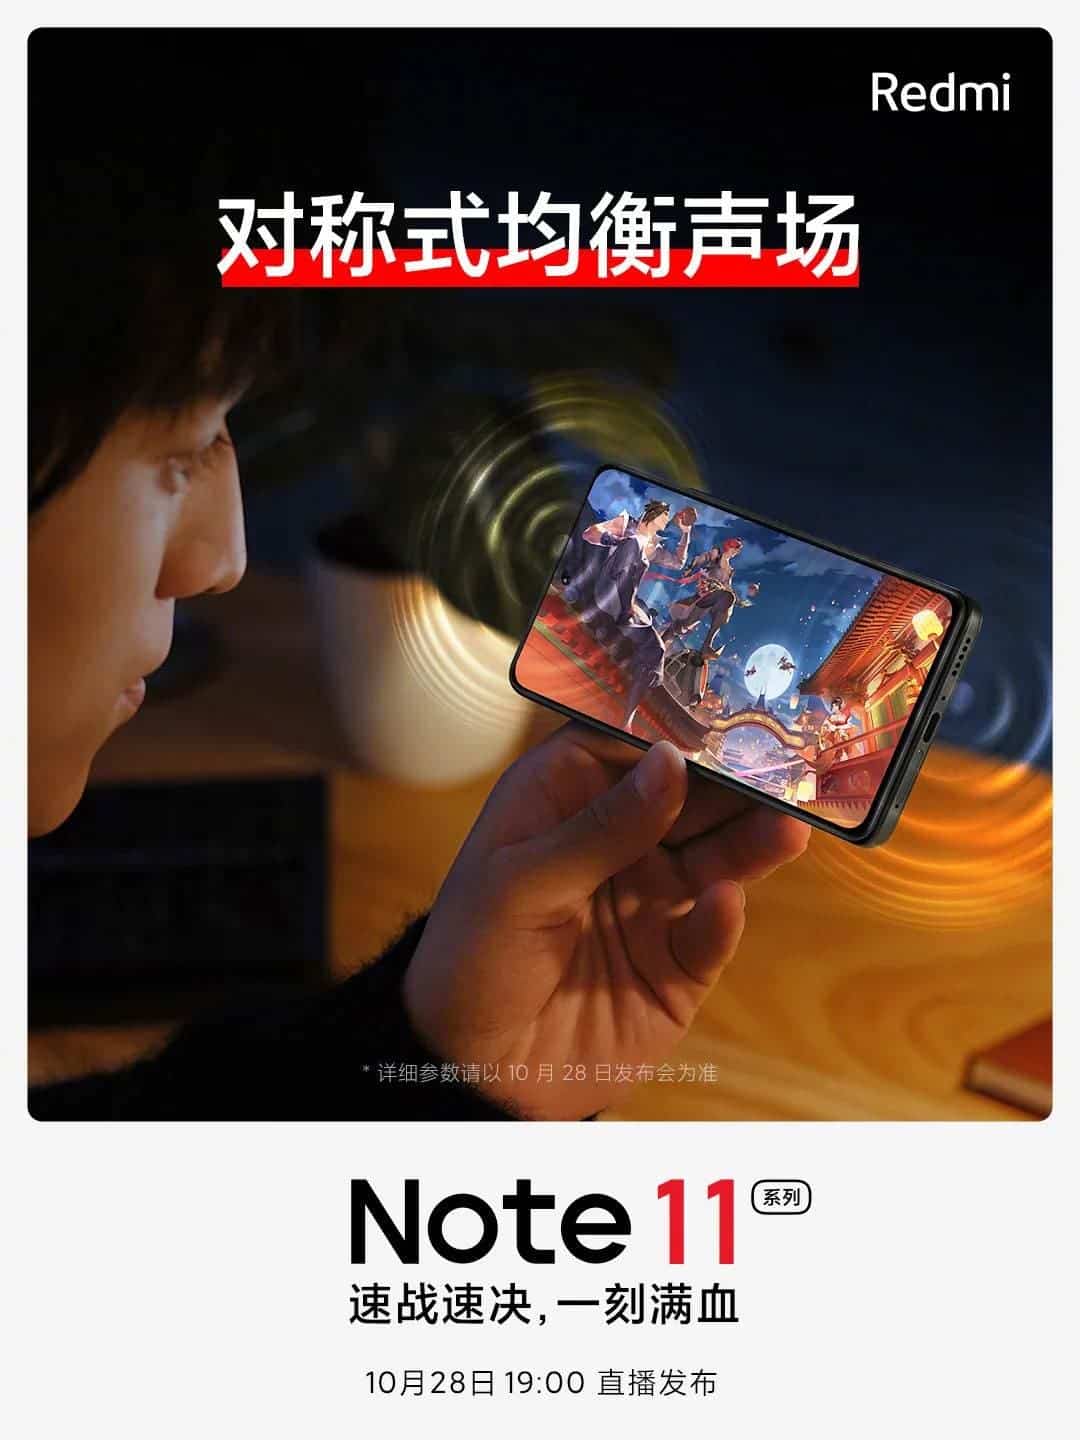 Poster quảng cáo Redmi Note 11 Pro_2